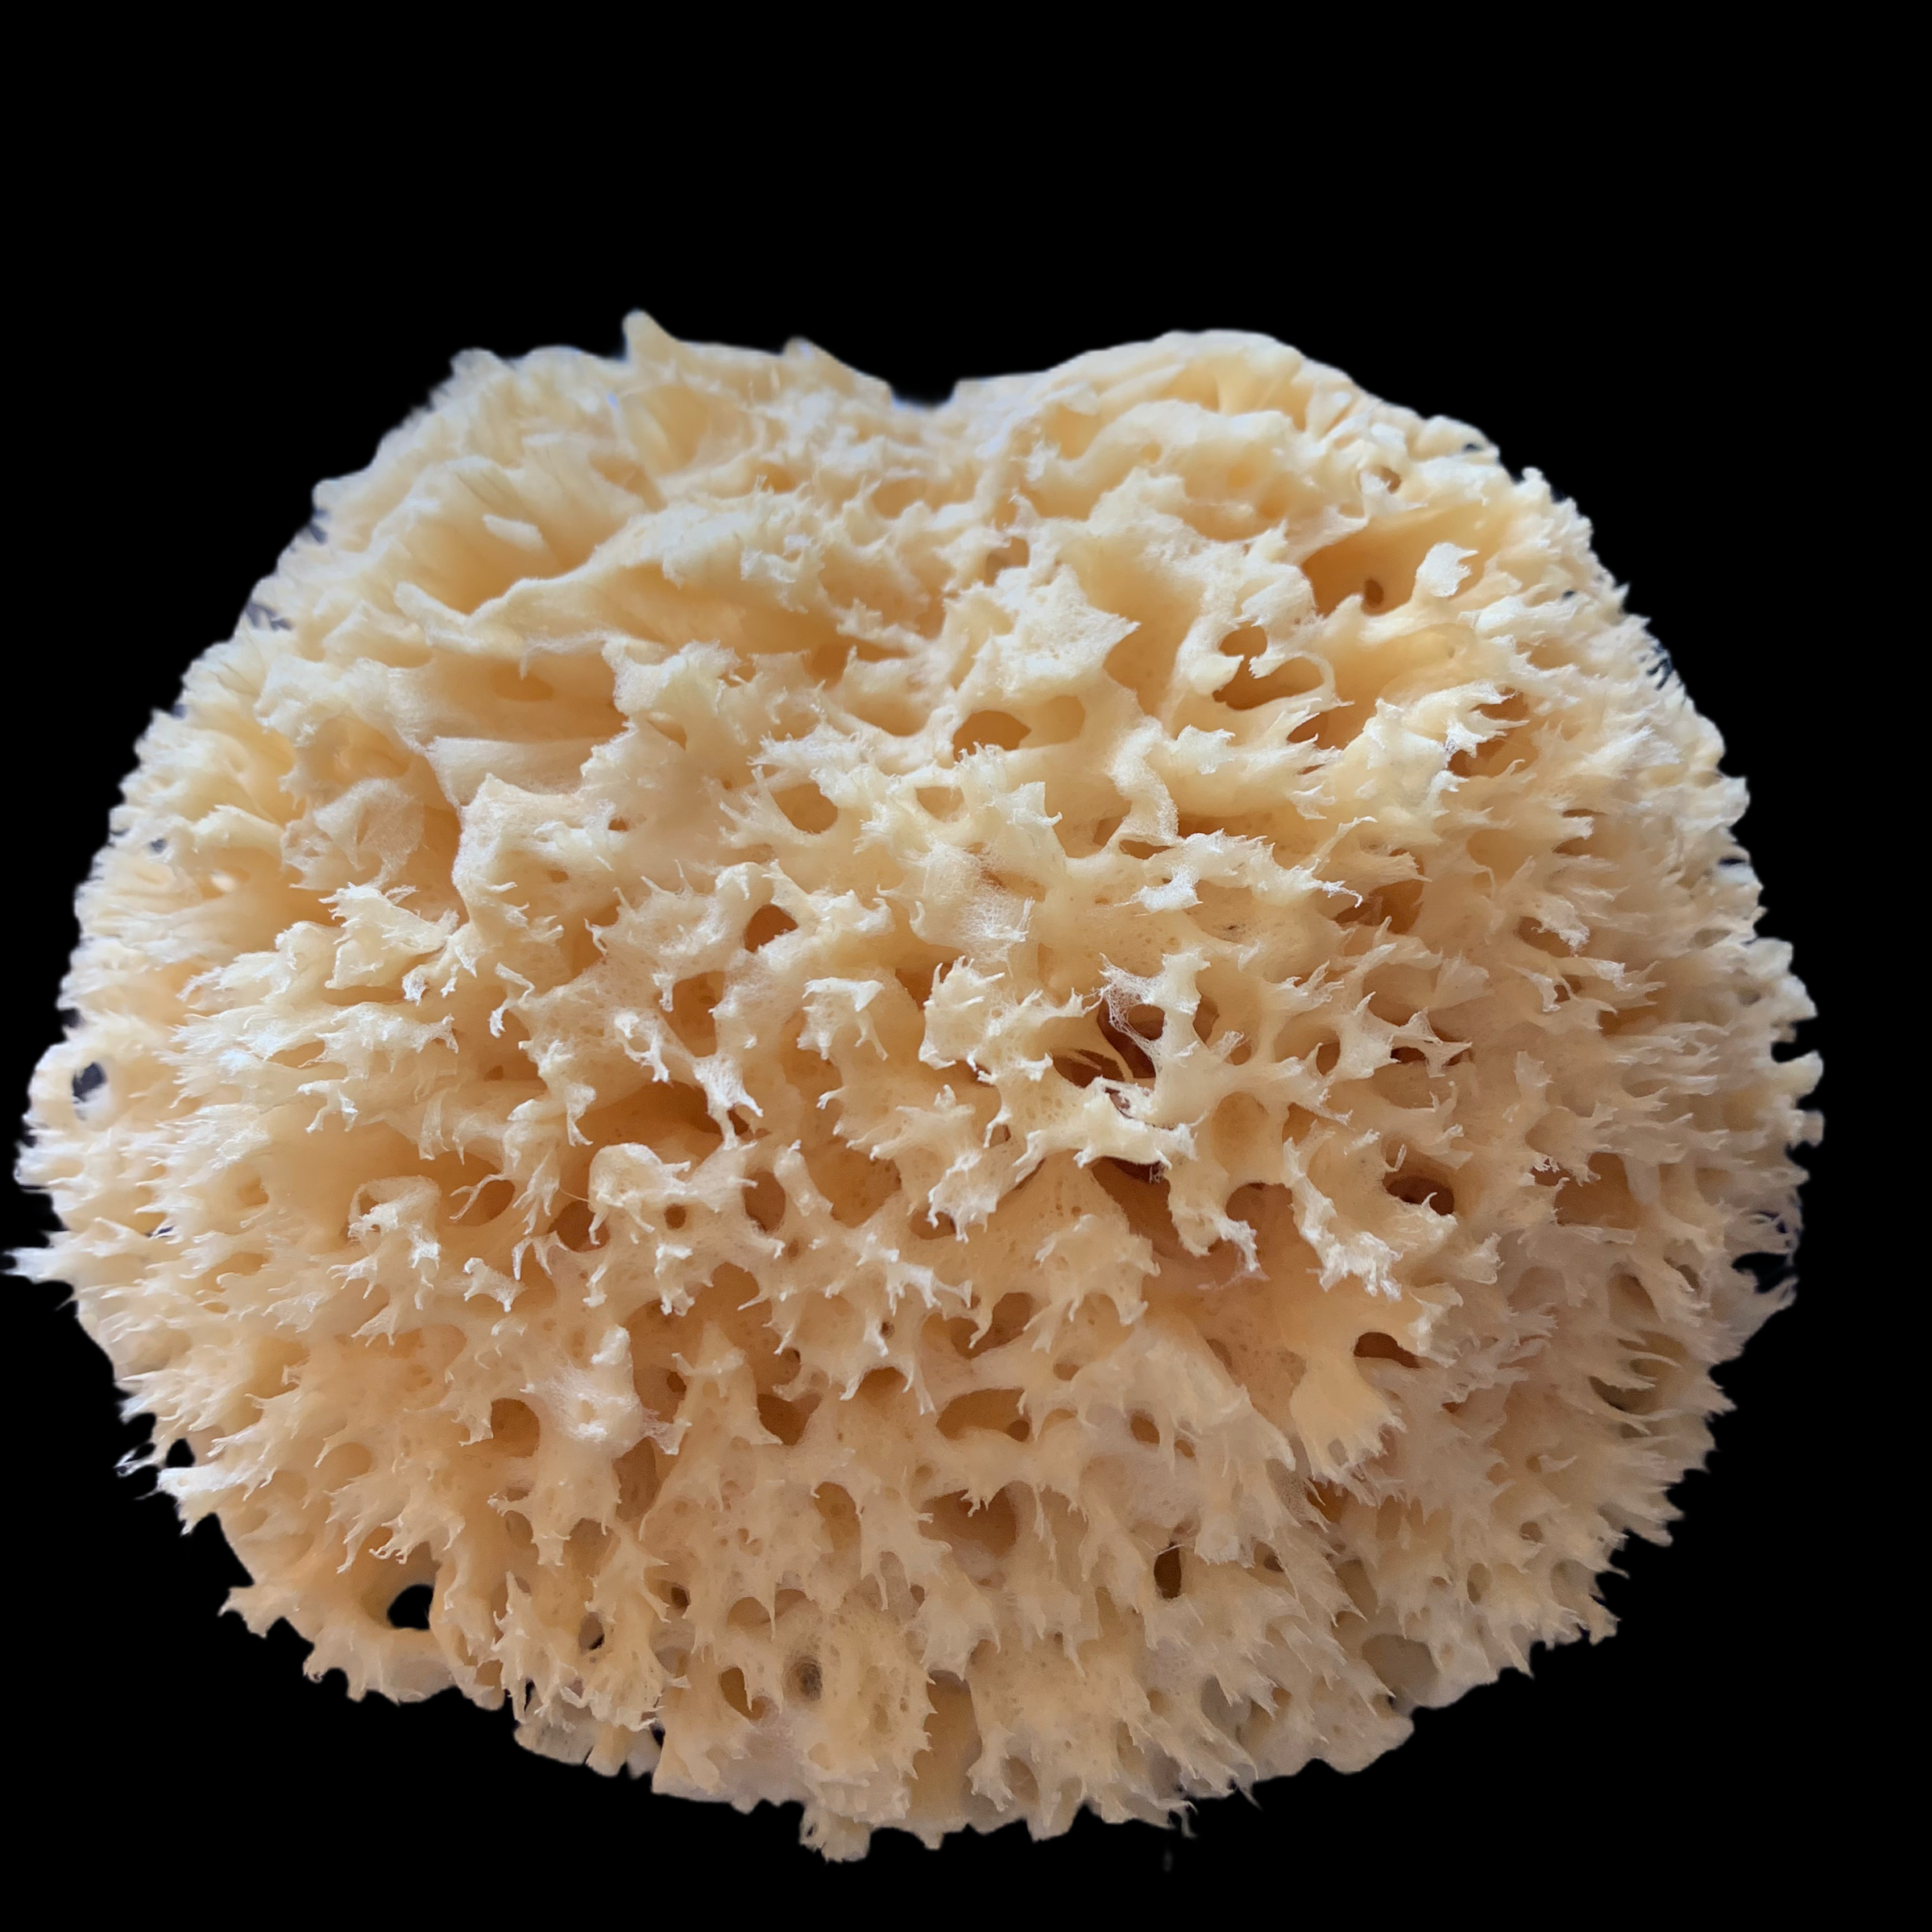 Real Sea Sponge for Men - Extra Large 6-7, Totally Natural, Kind